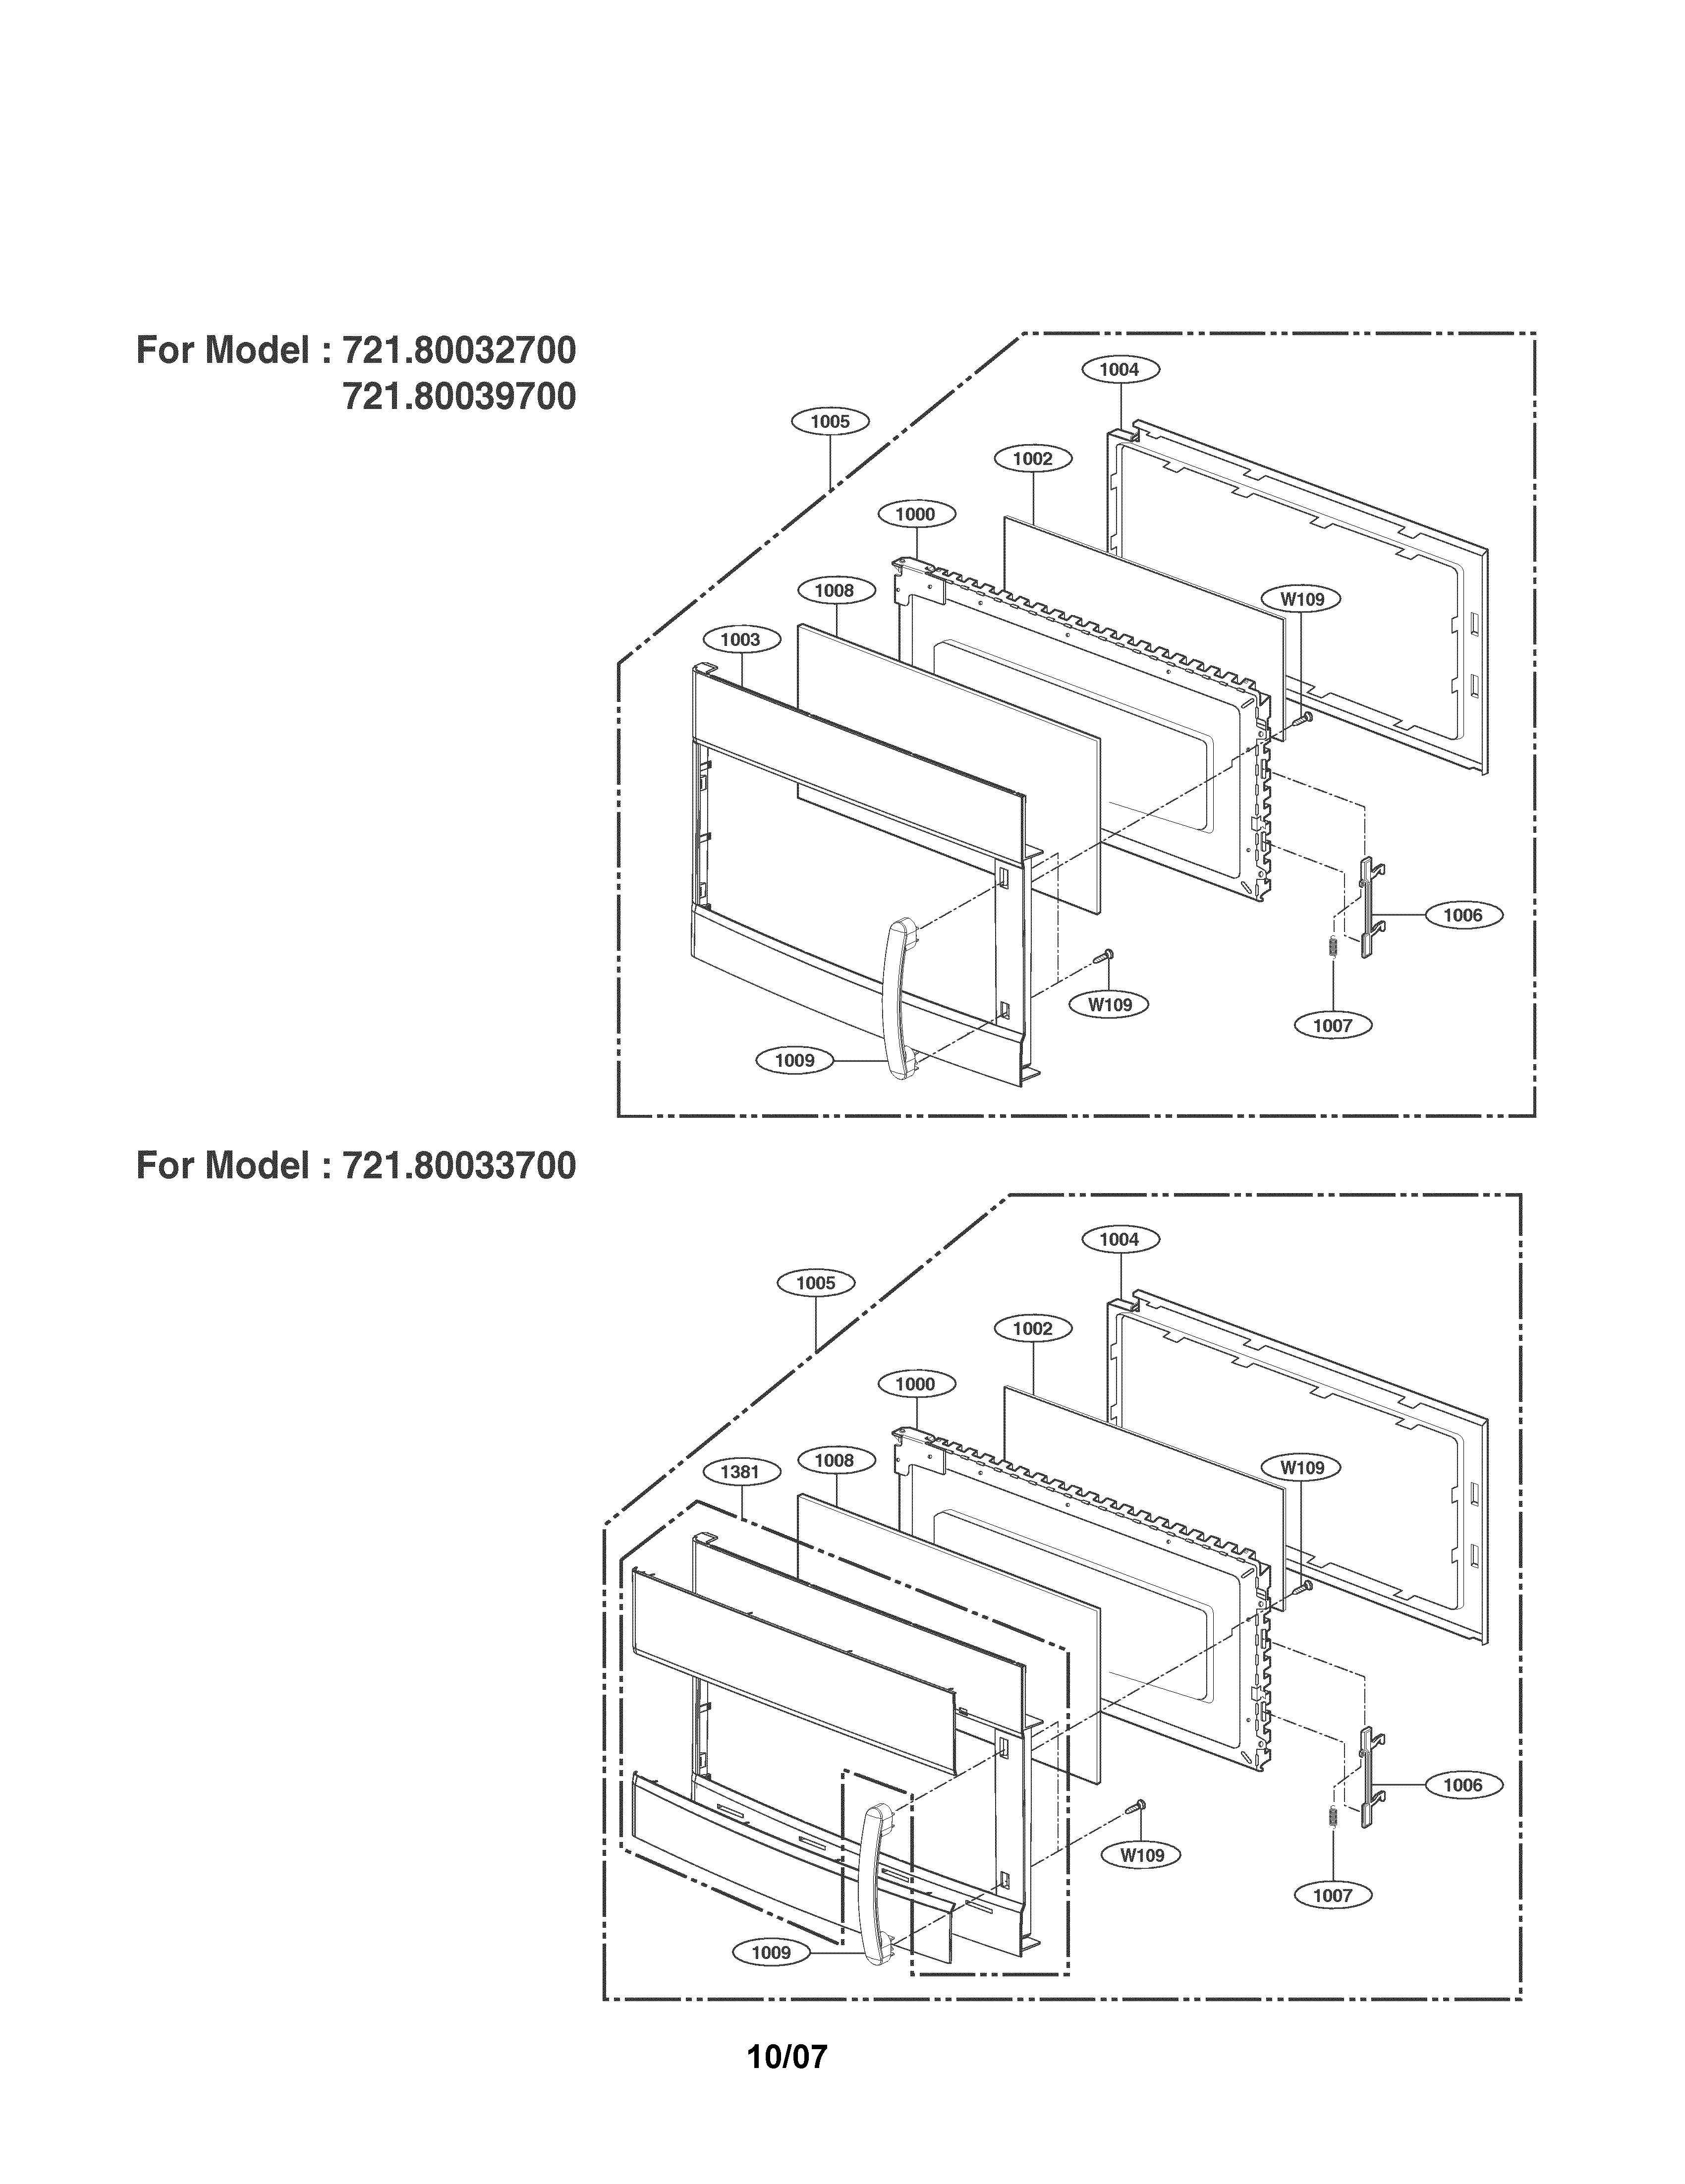 KENMORE MICROWAVE Parts | Model 72180039700 | Sears PartsDirect